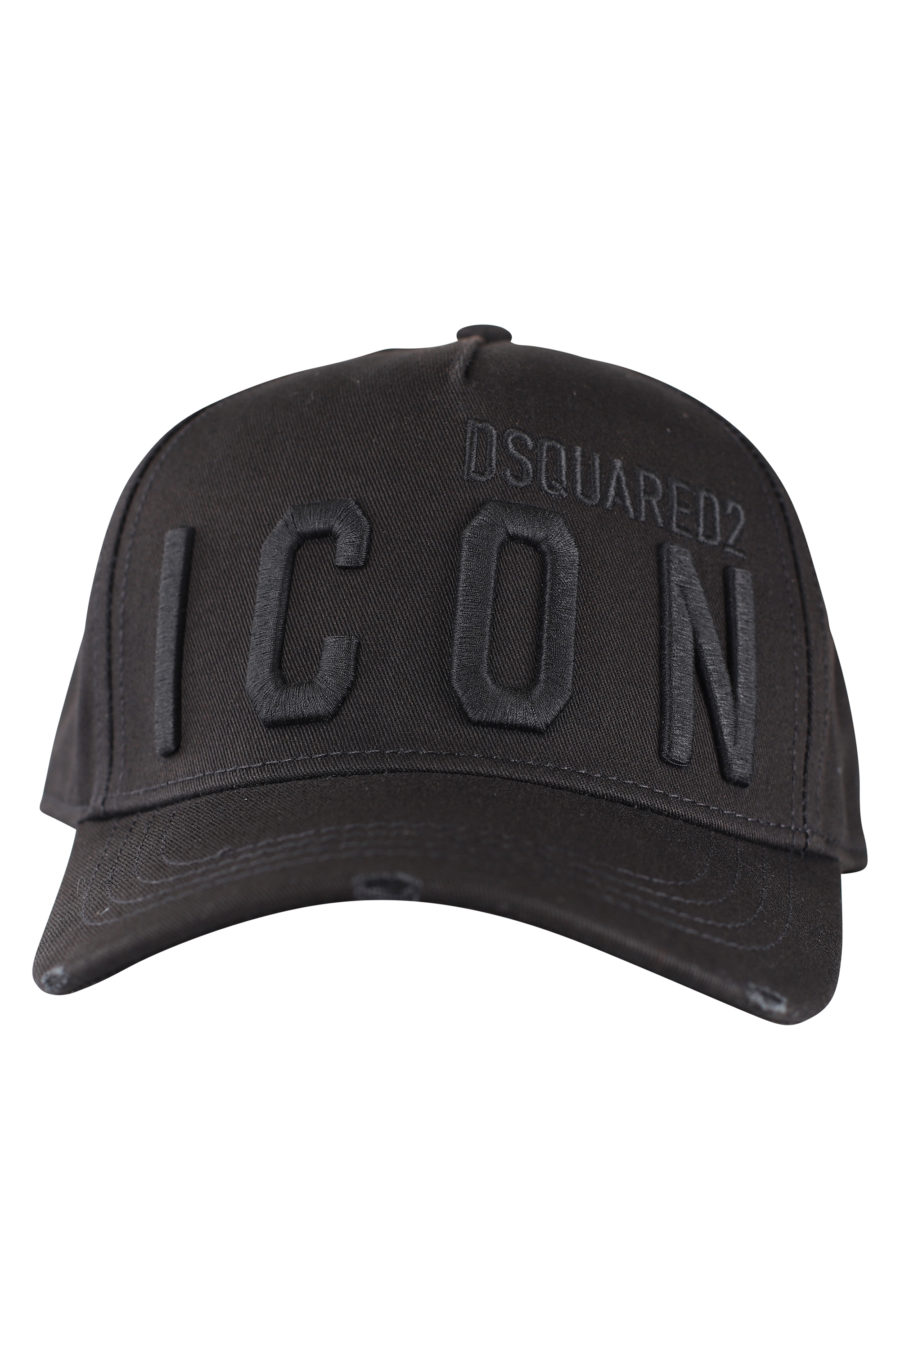 Adjustable black cap with black "icon" logo - IMG 9968